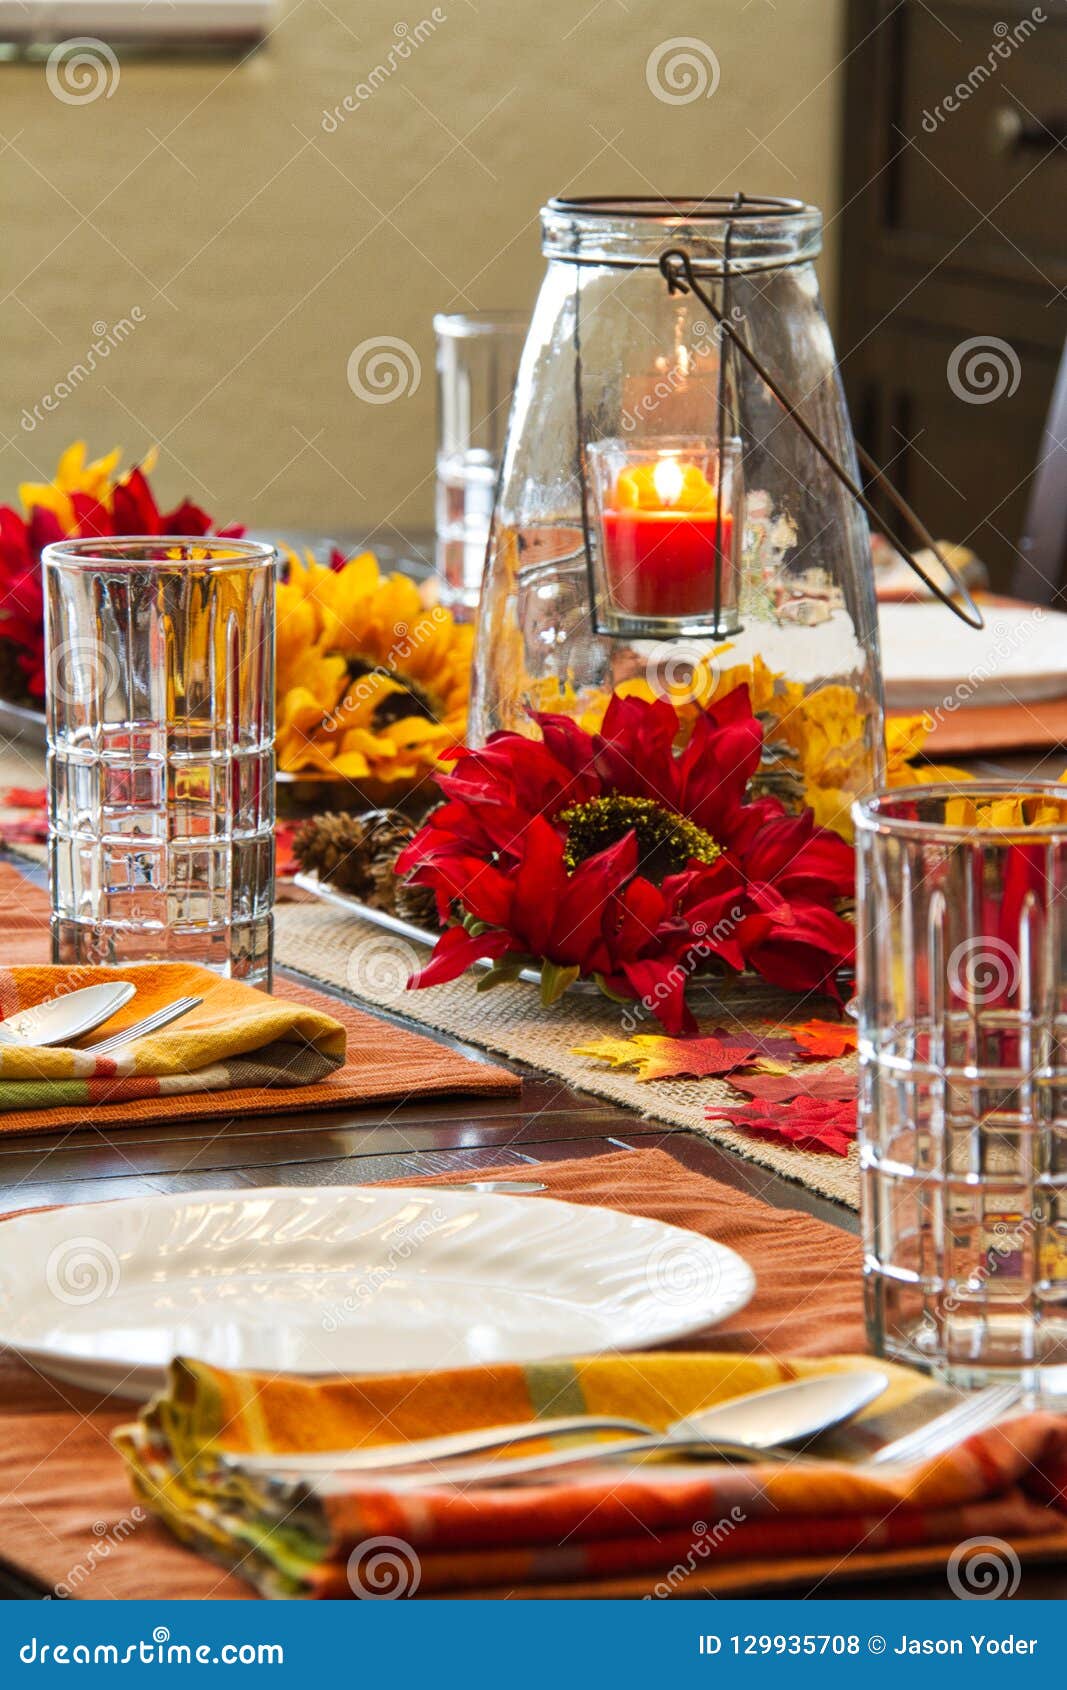 Fall Table Setting stock photo. Image of table, setting - 129935708